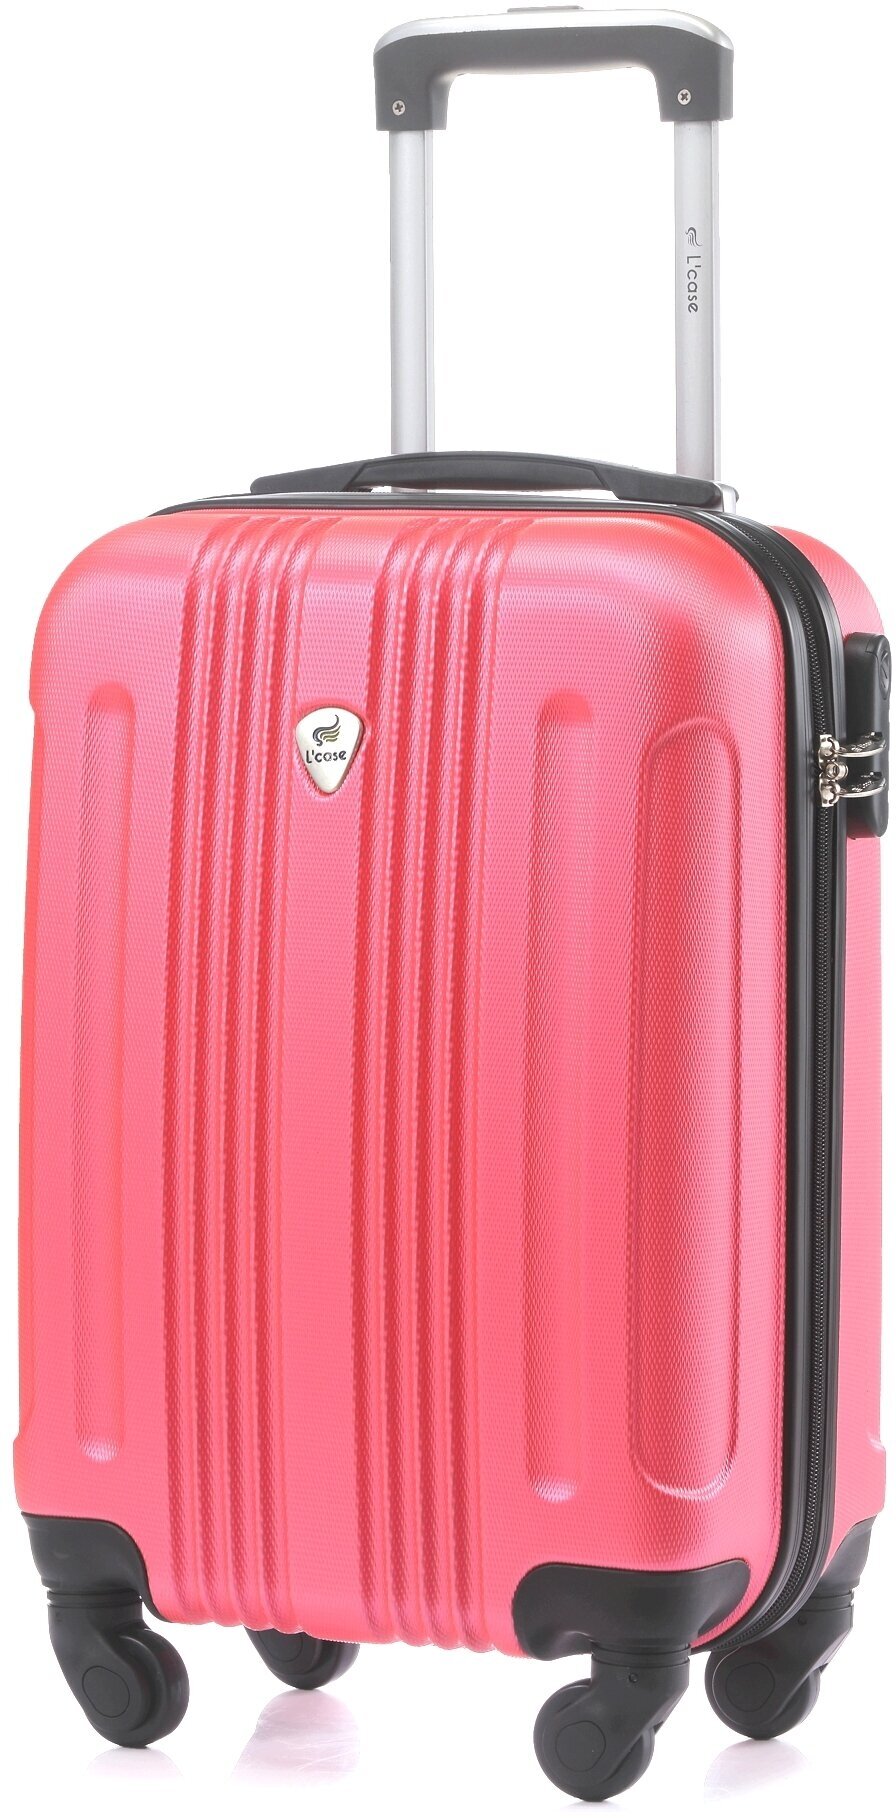 Чемодан ручная кладь L’case Bangkok размера S (53х34х21 см), объем 32 литра, вес 2,2 кг, Розовый